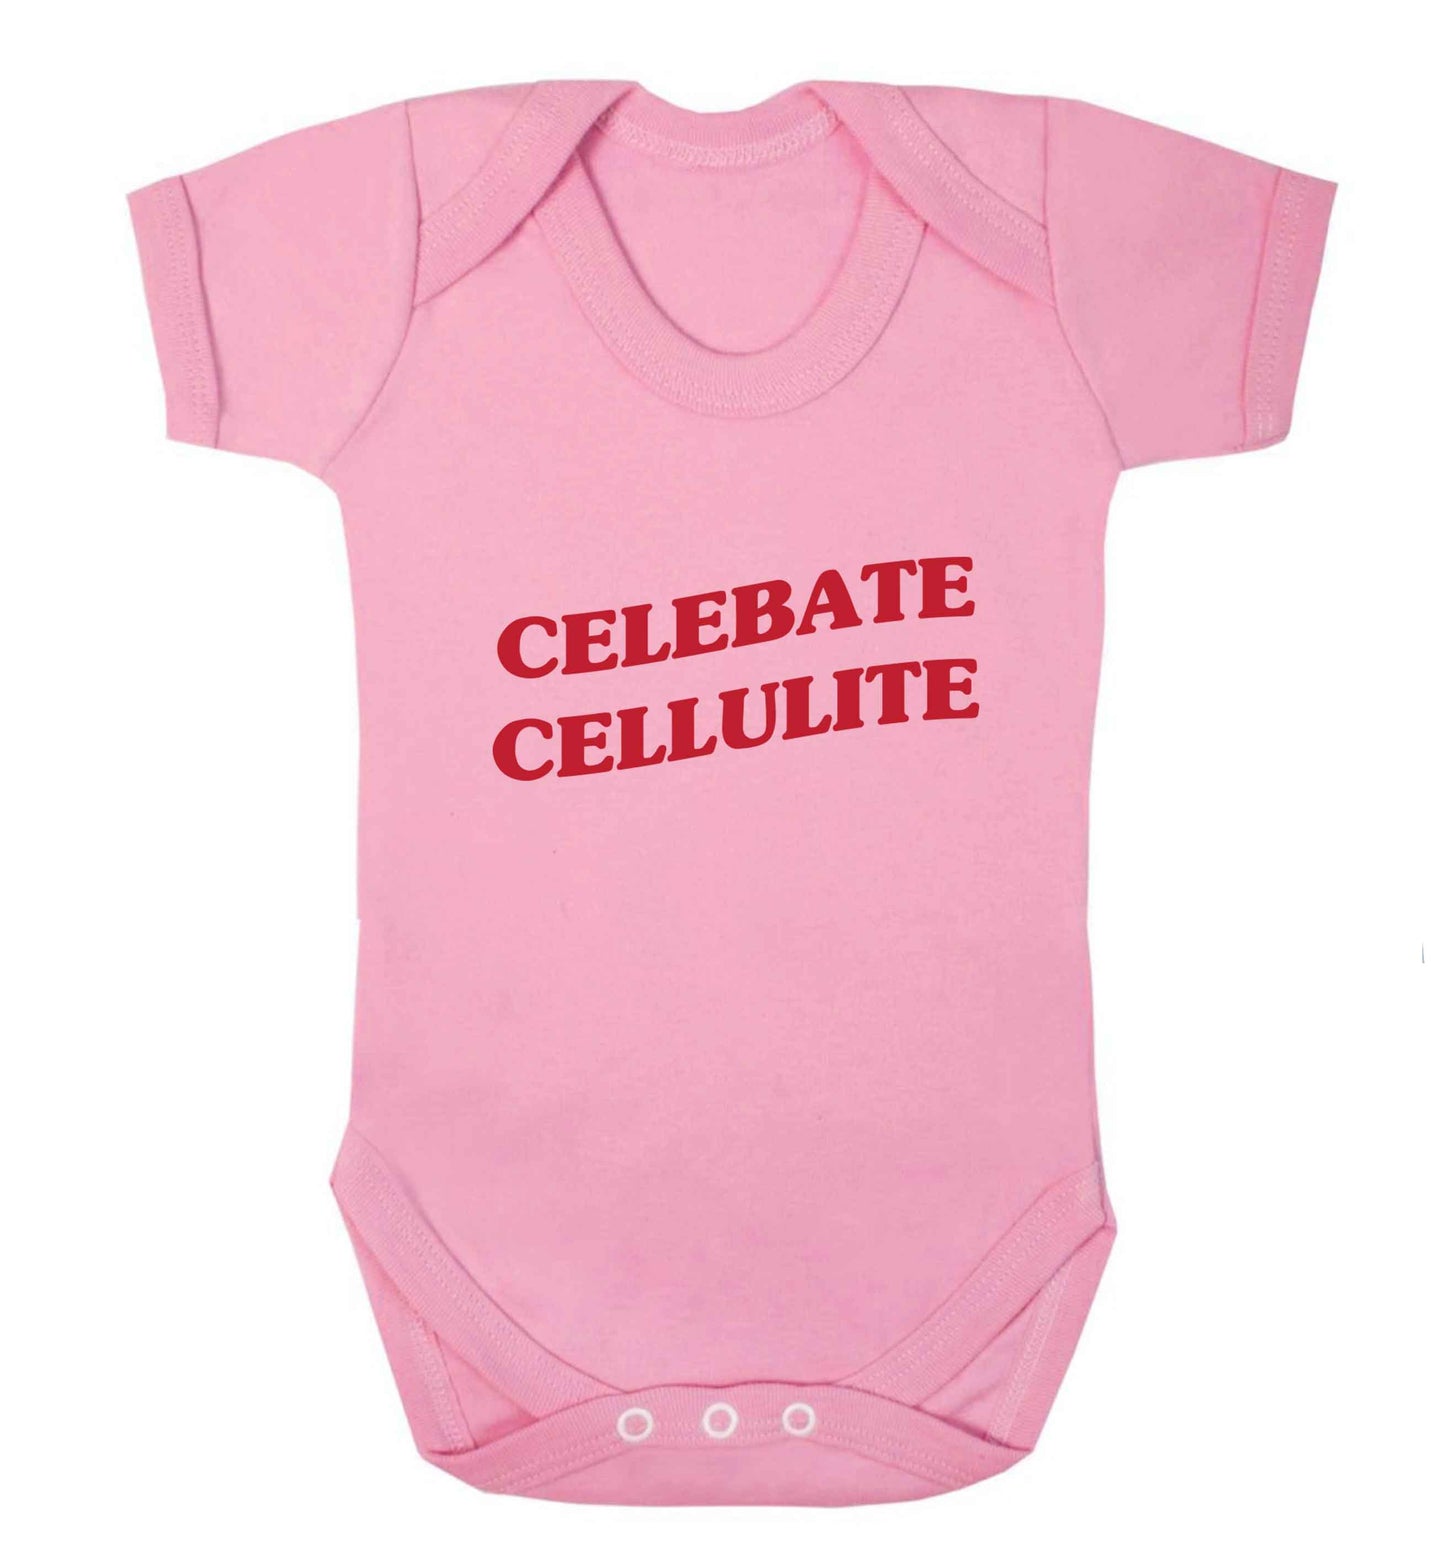 Celebrate cellulite baby vest pale pink 18-24 months